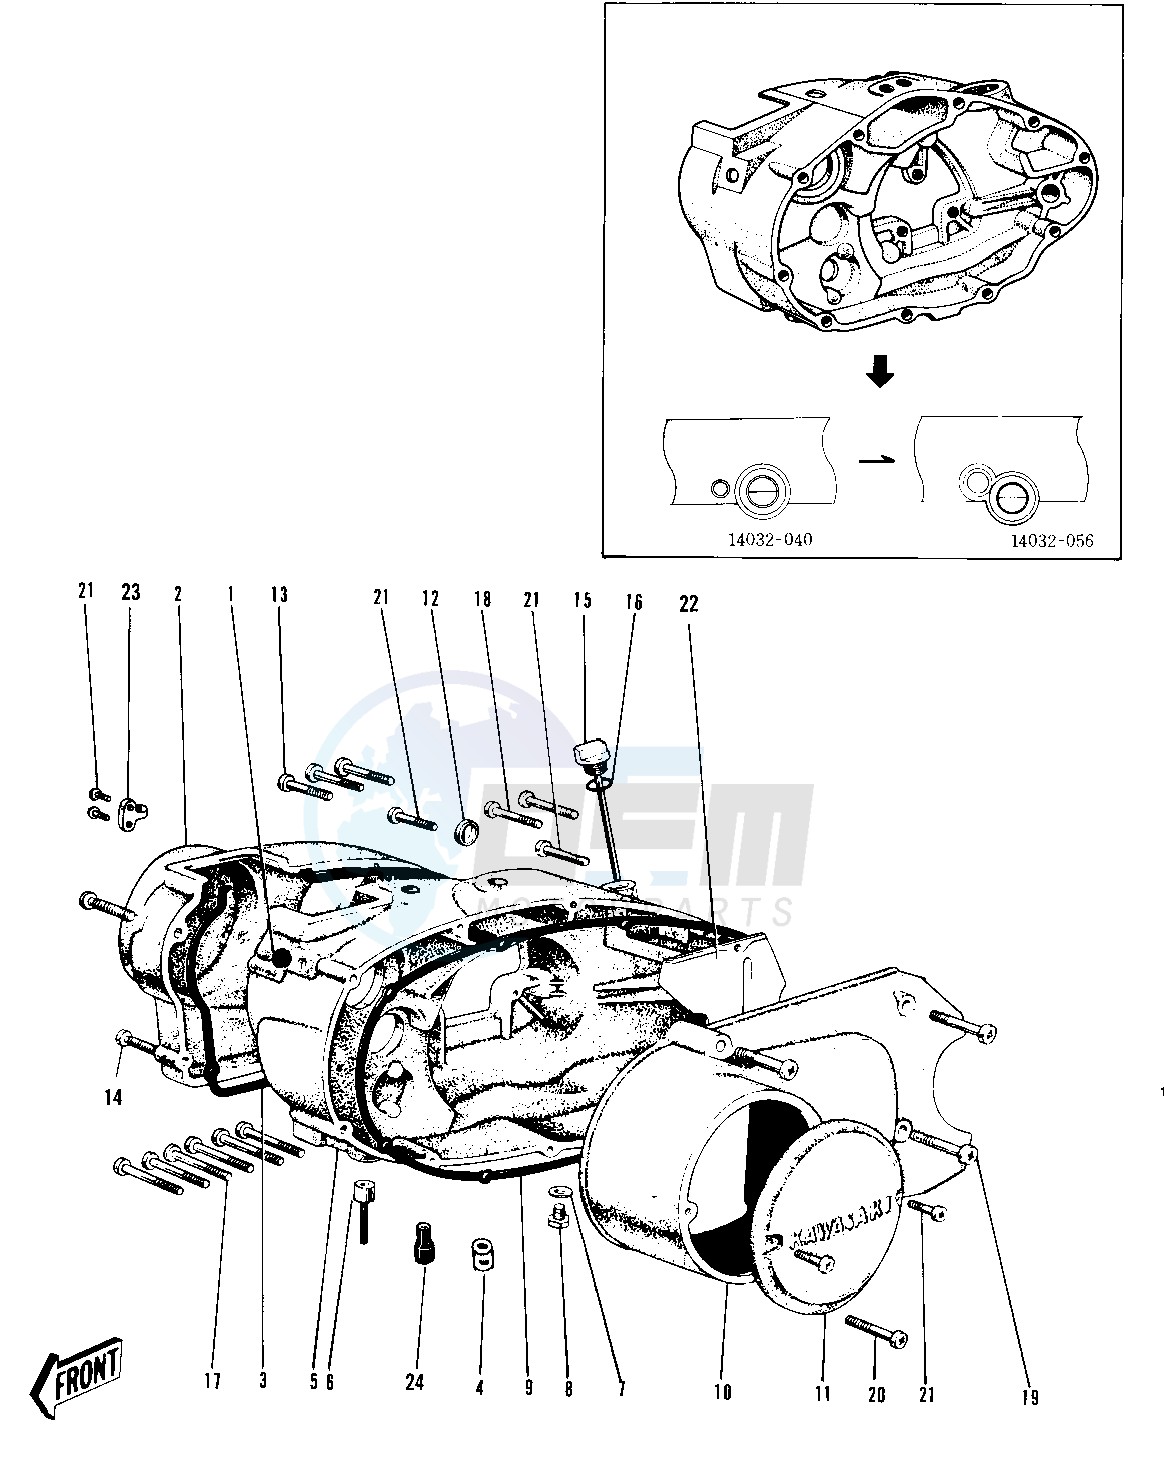 ENGINE COVERS blueprint